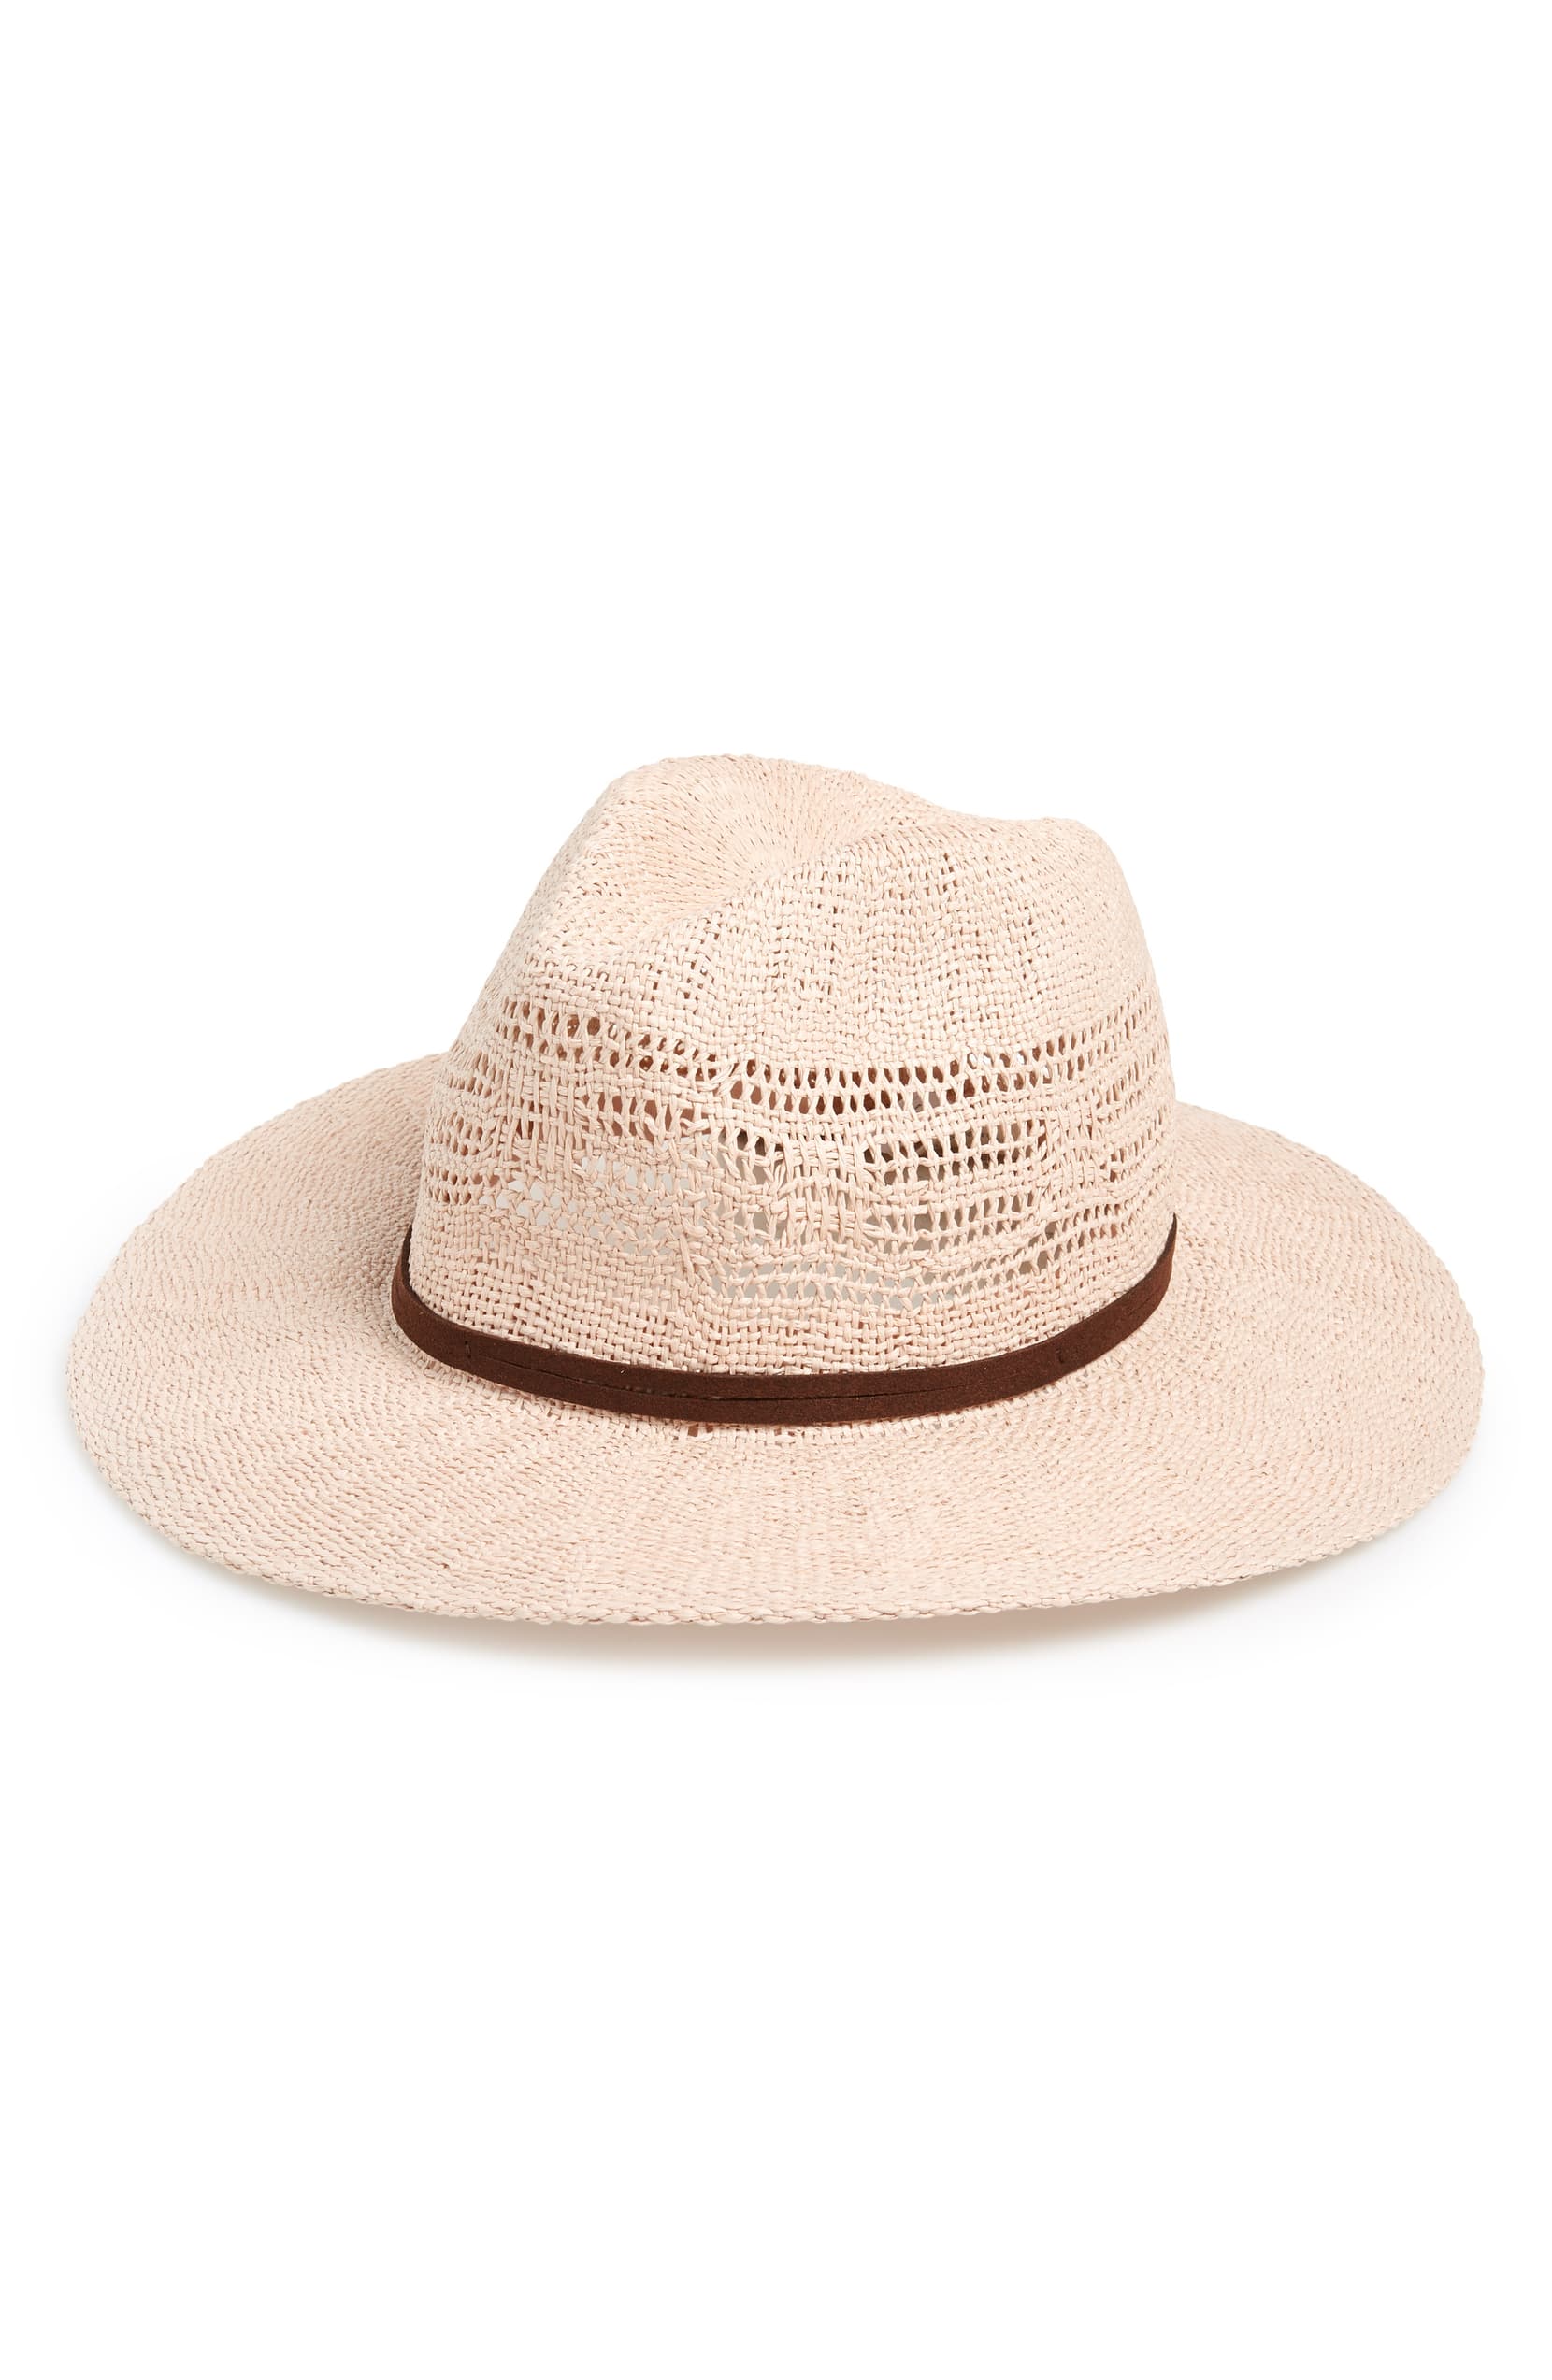 Treasure & Bond Open Weave Panama Hat